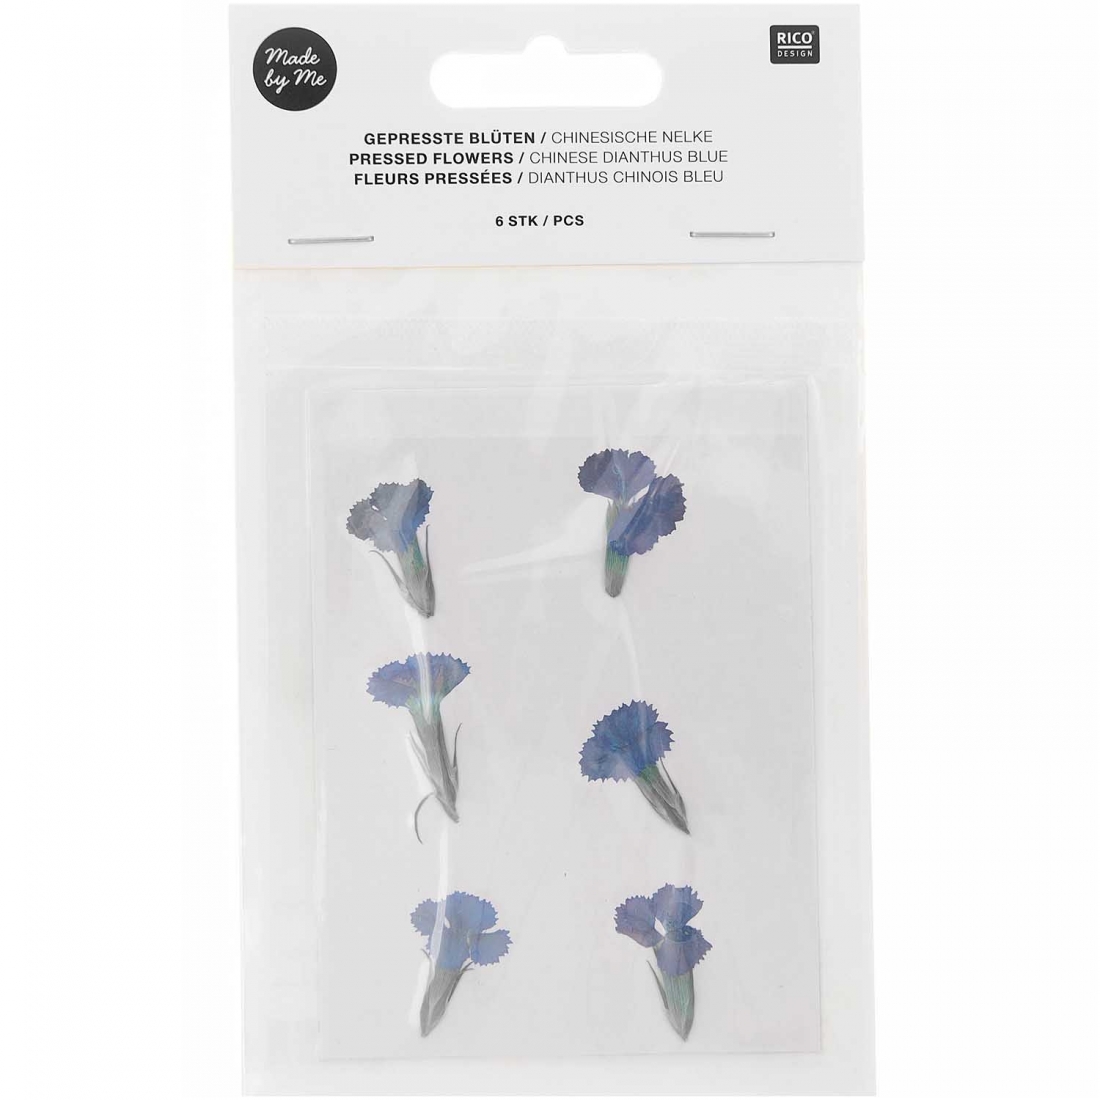 Chinese dianthus blue (6pcs) - (flores prensadas)